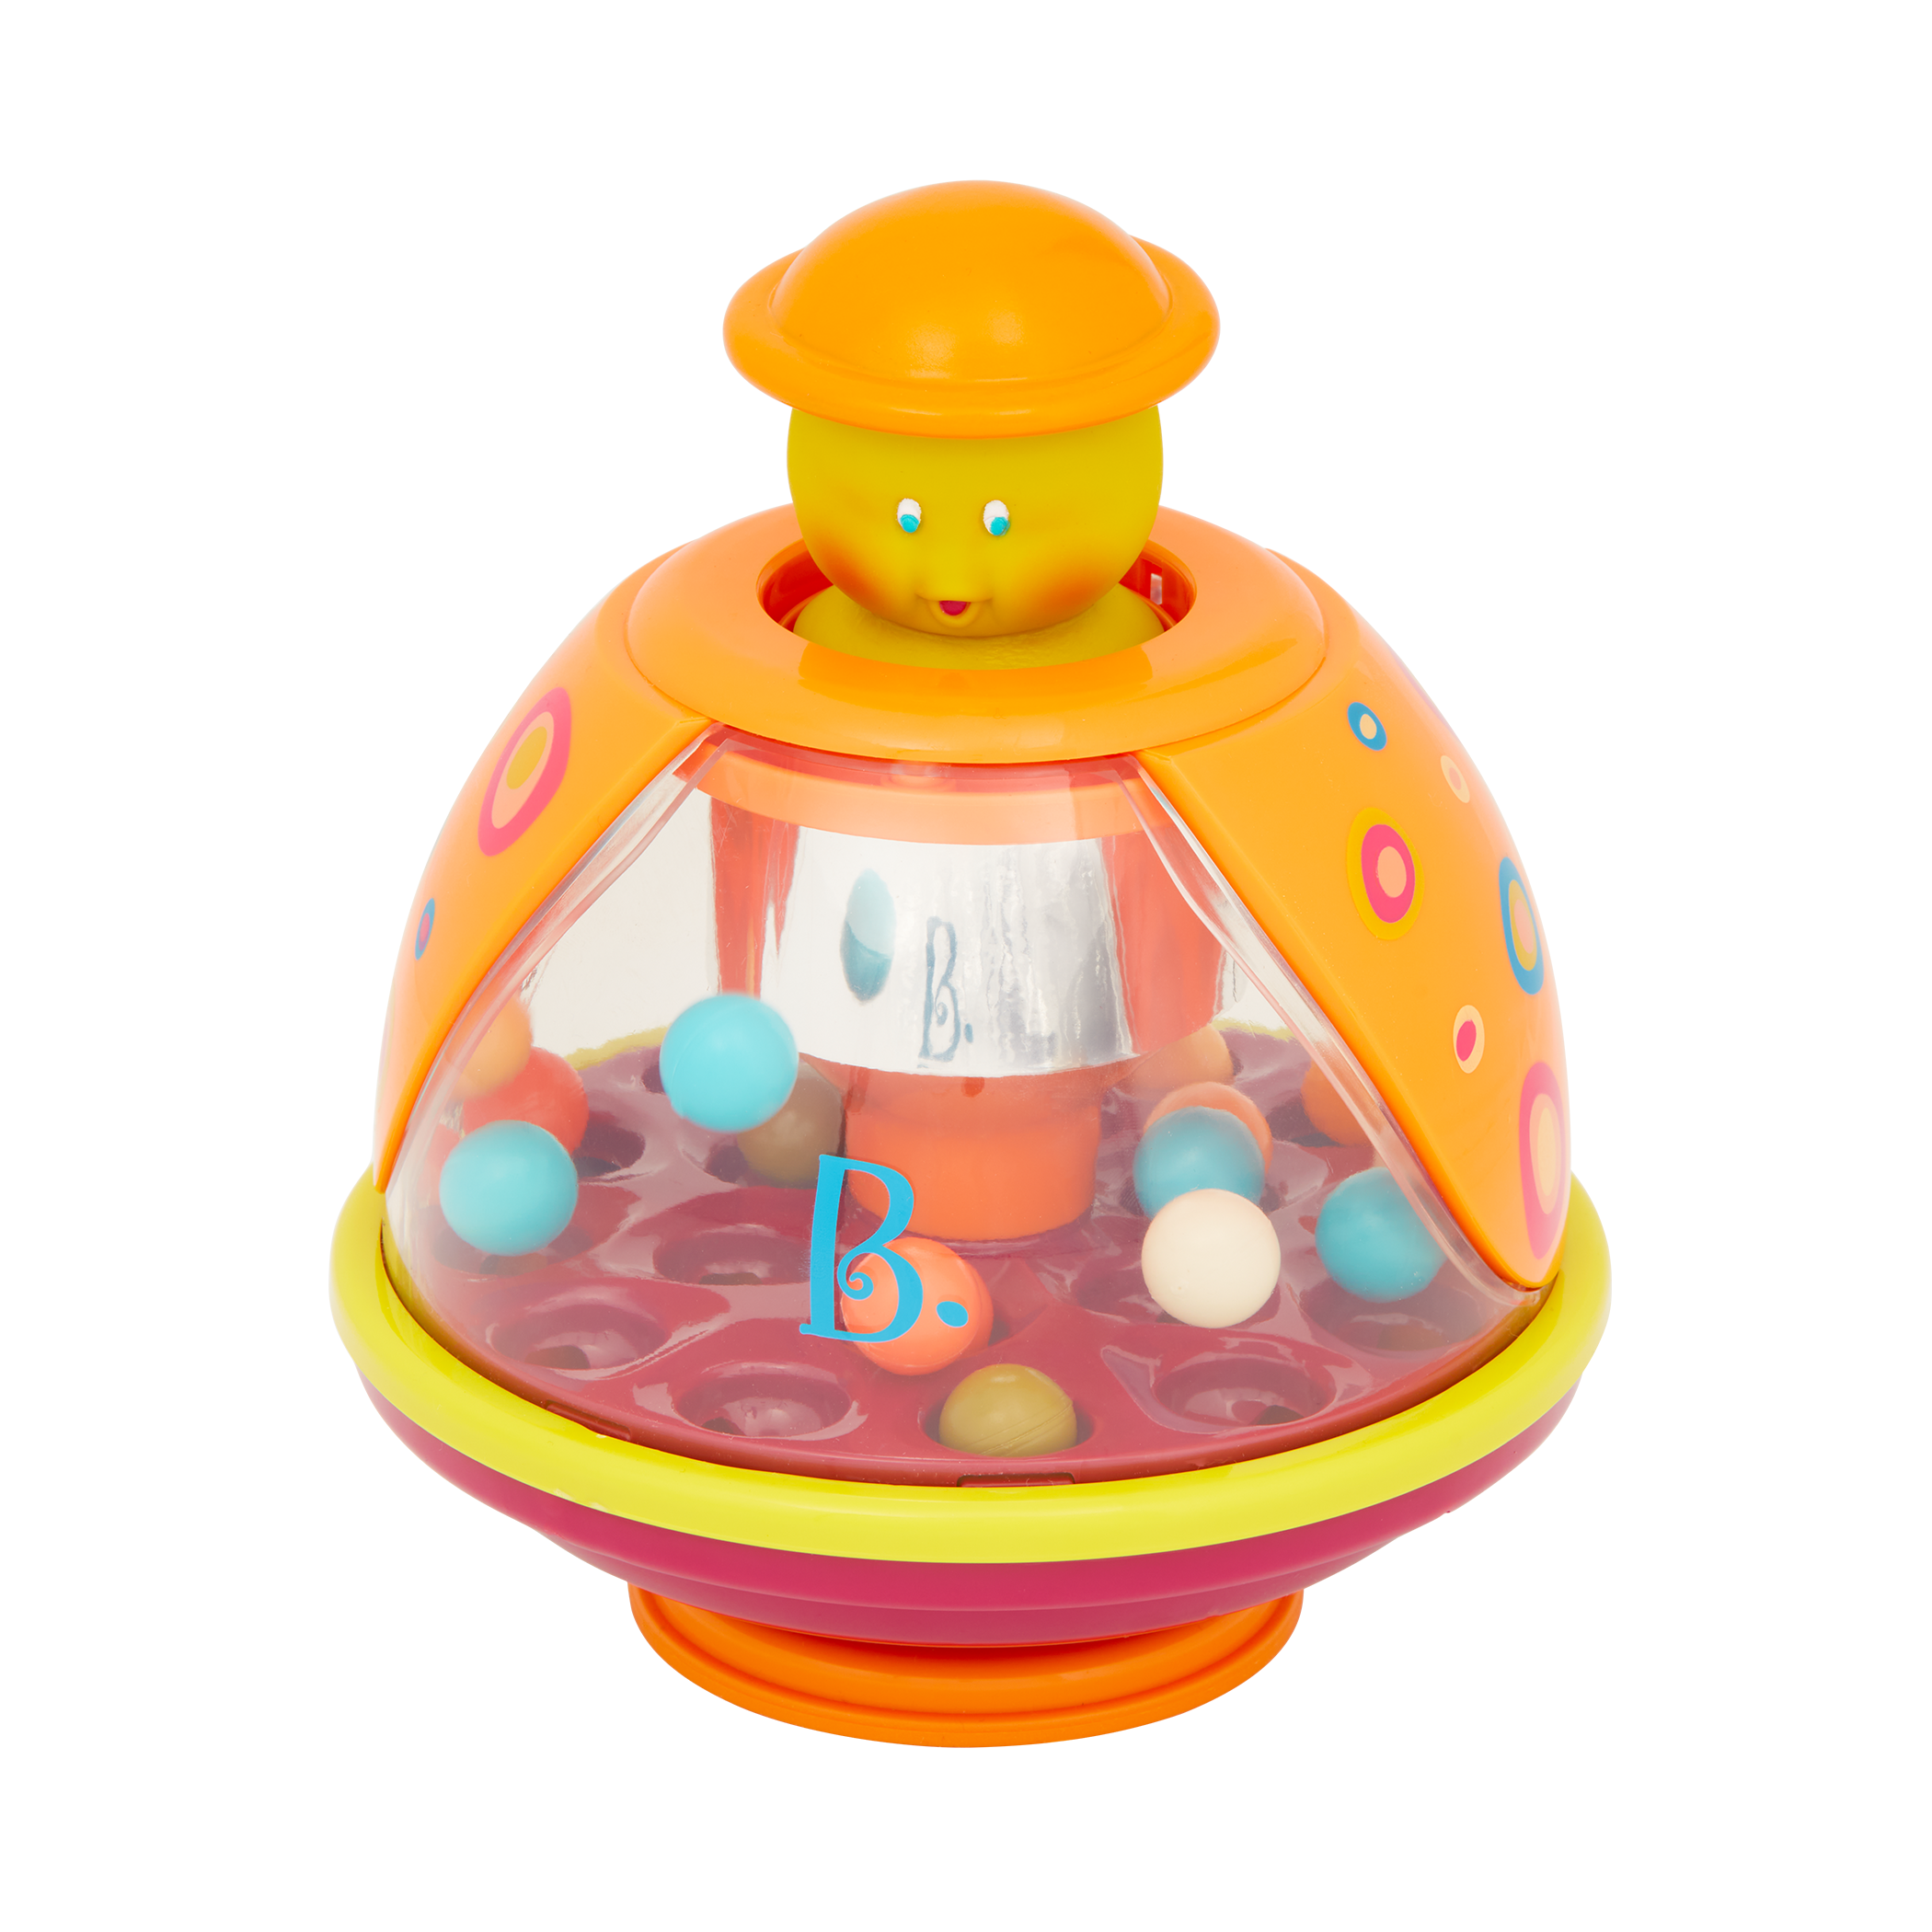 Ladybug tumble toy with colorful balls